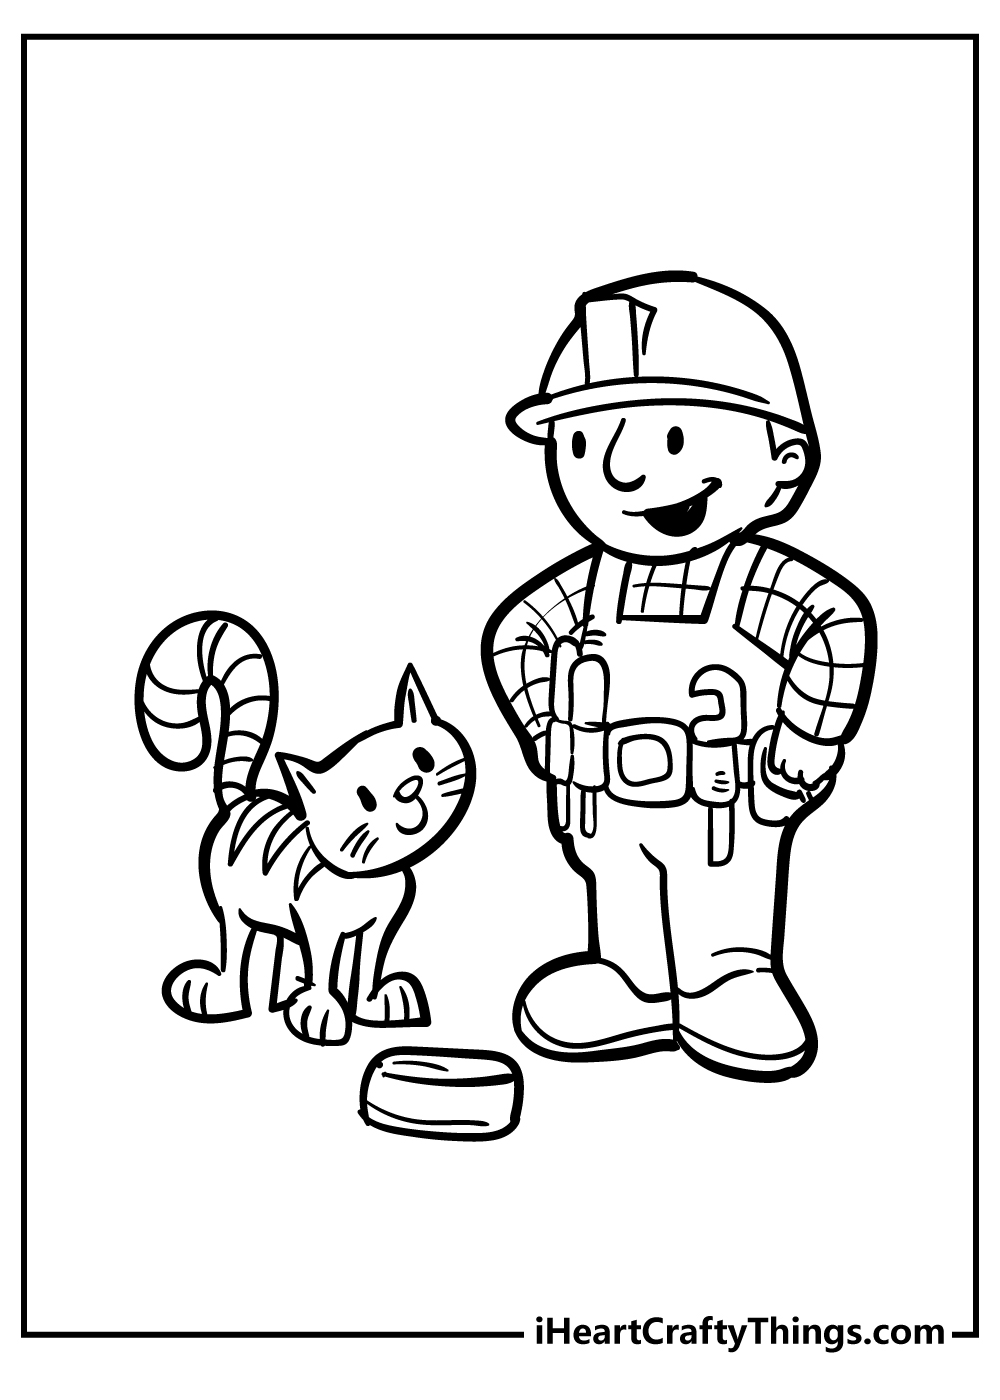 Bob the Builder Coloring Original Sheet for children free download